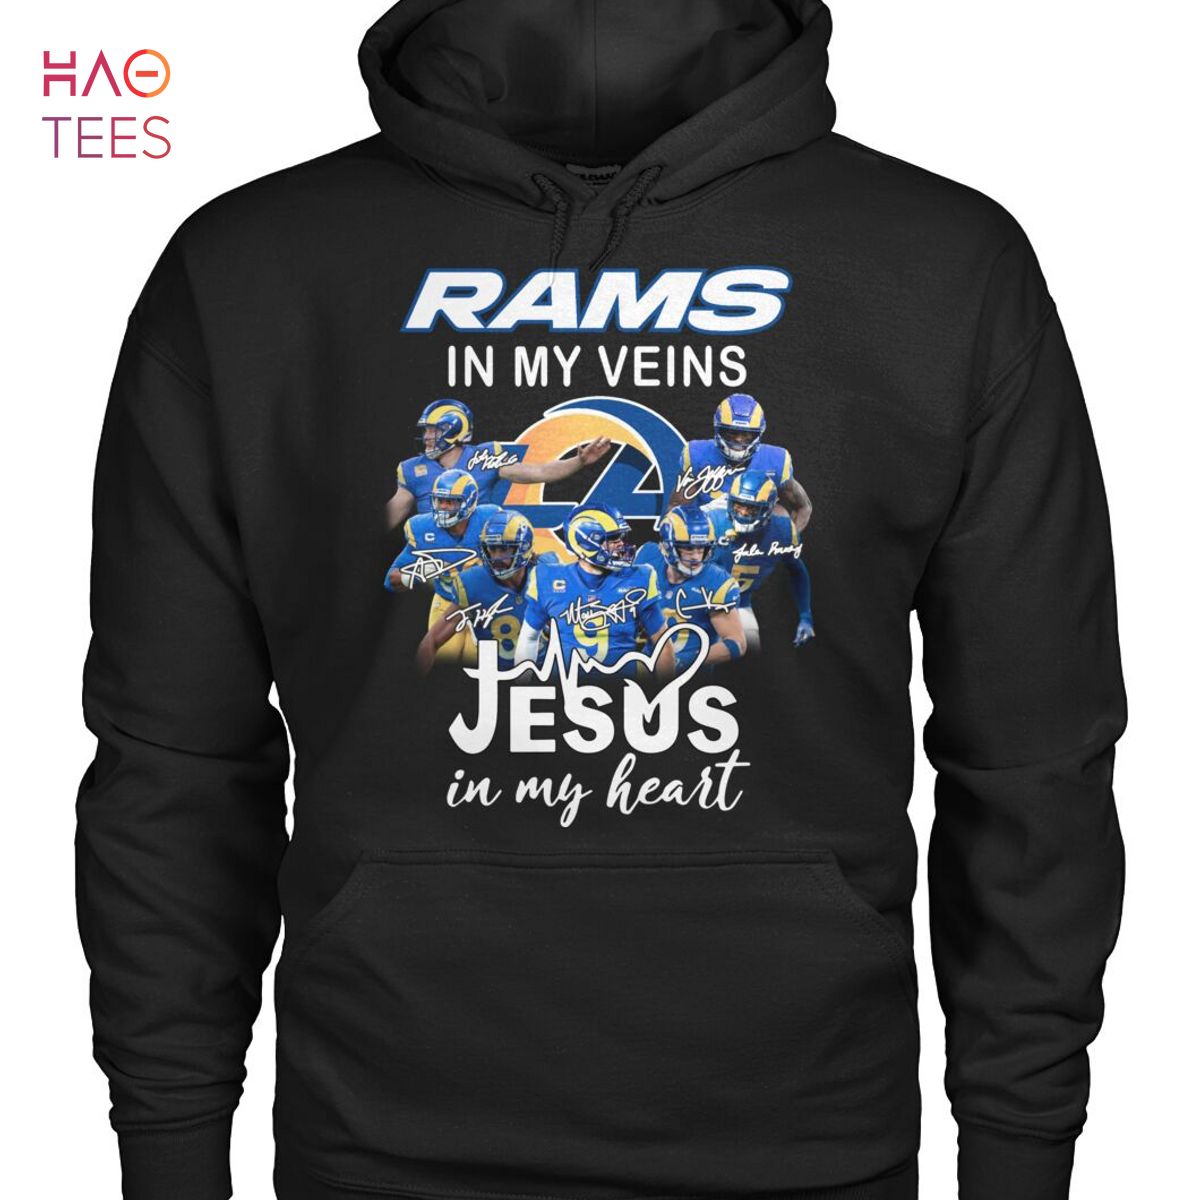 Rams In My Veins Jesus In My Heart T Shirt Unisex T Shirt